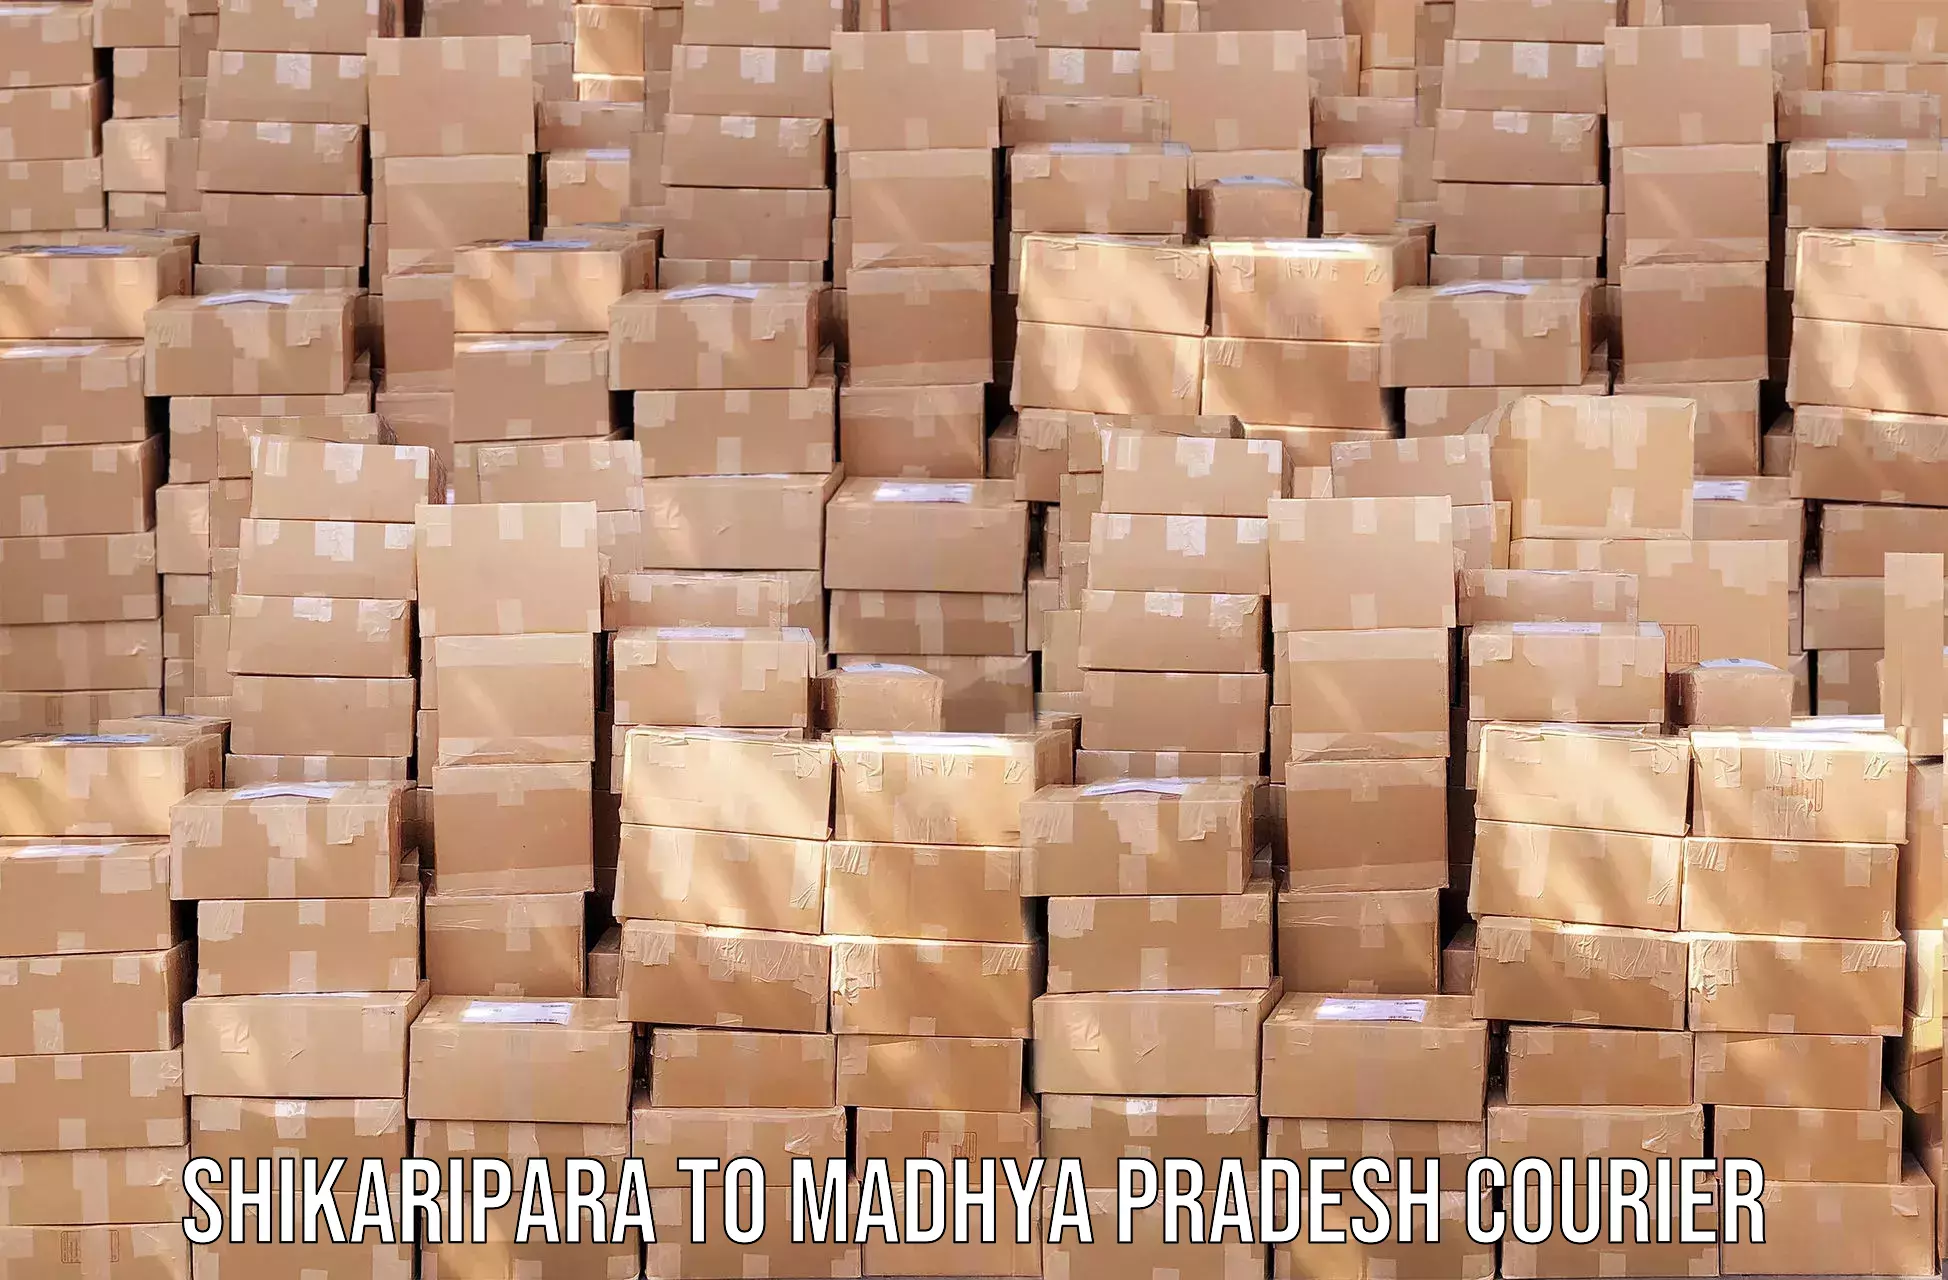 Courier service partnerships Shikaripara to Dhar